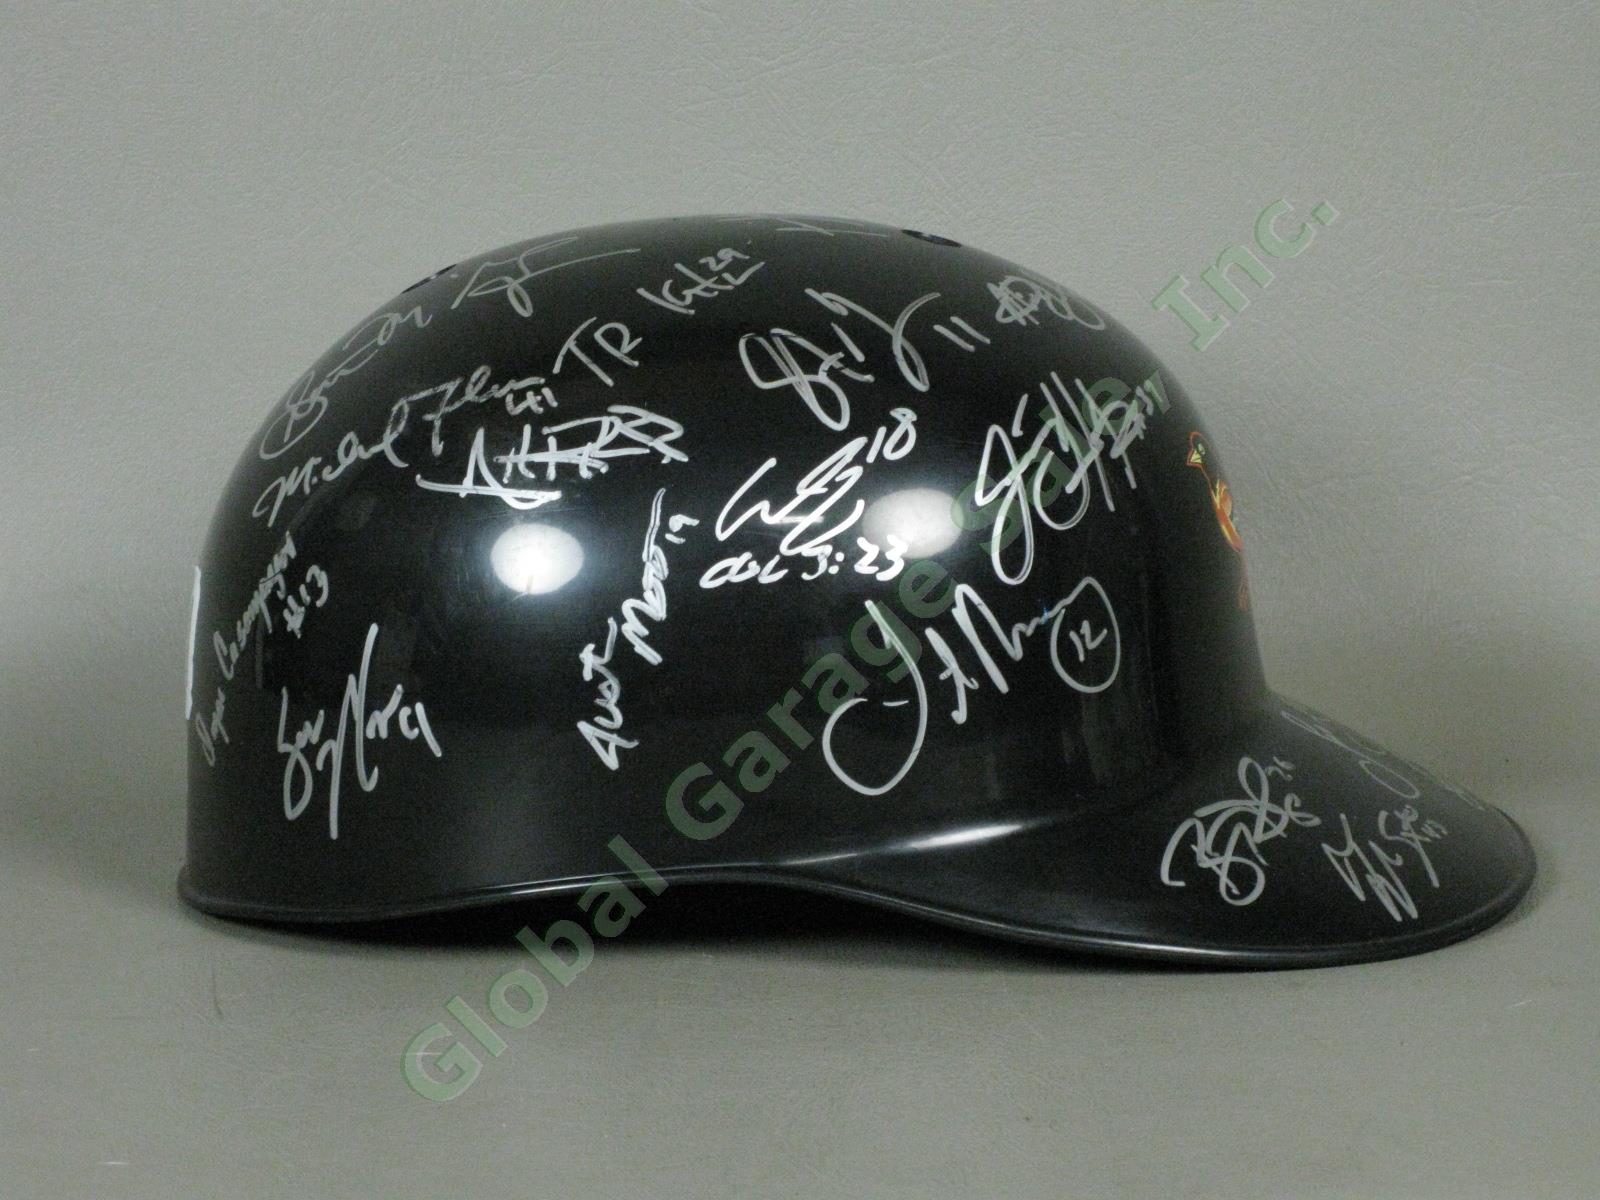 2010 Aberdeen Ironbirds Team Signed Baseball Helmet NYPL Baltimore Orioles NR 1